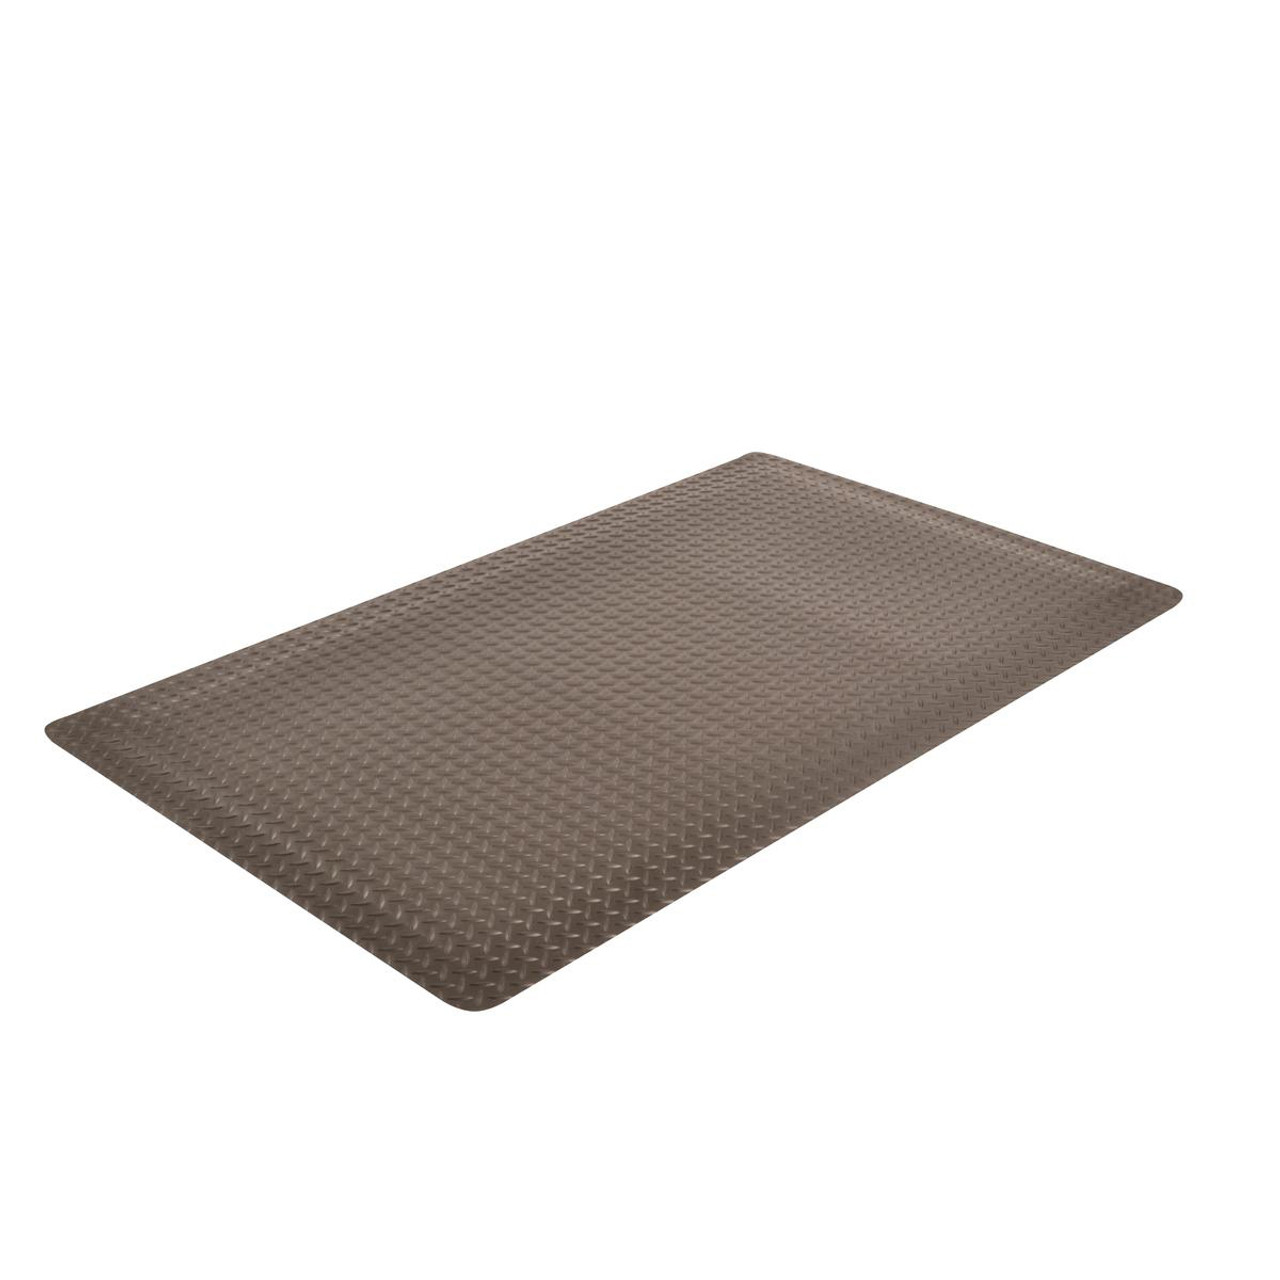 6-Count Diamond Plate Design Anti-Fatigue Mat